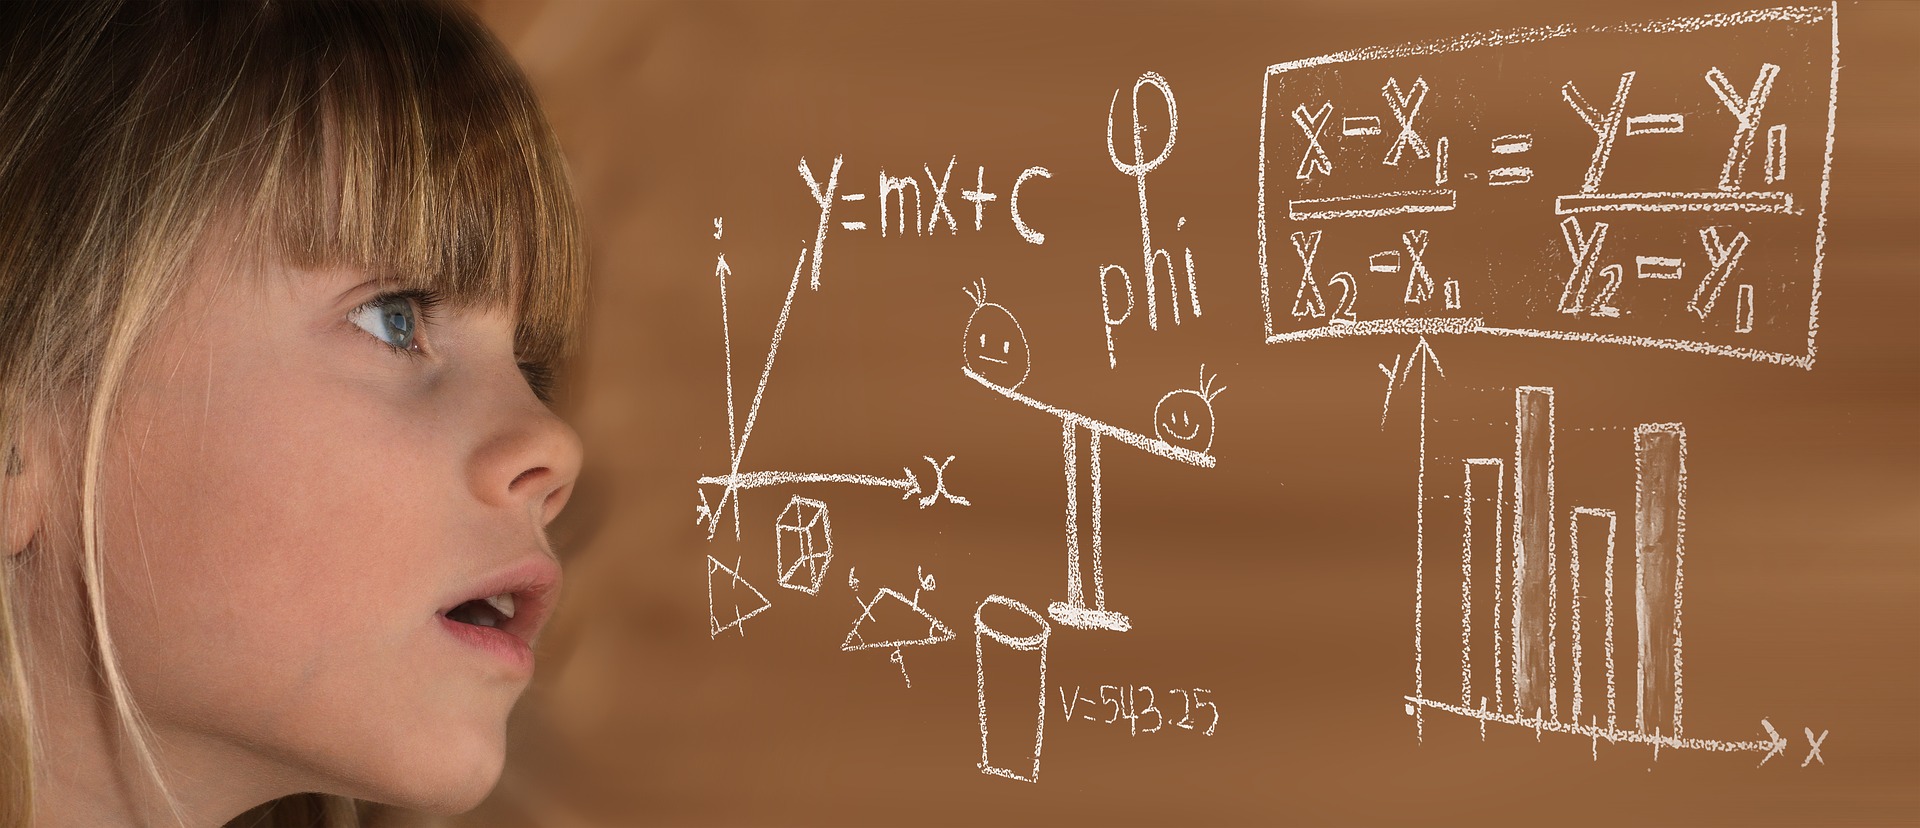 maths science girl equation board learn-2405206_1920Gerd Altmann Pixabay